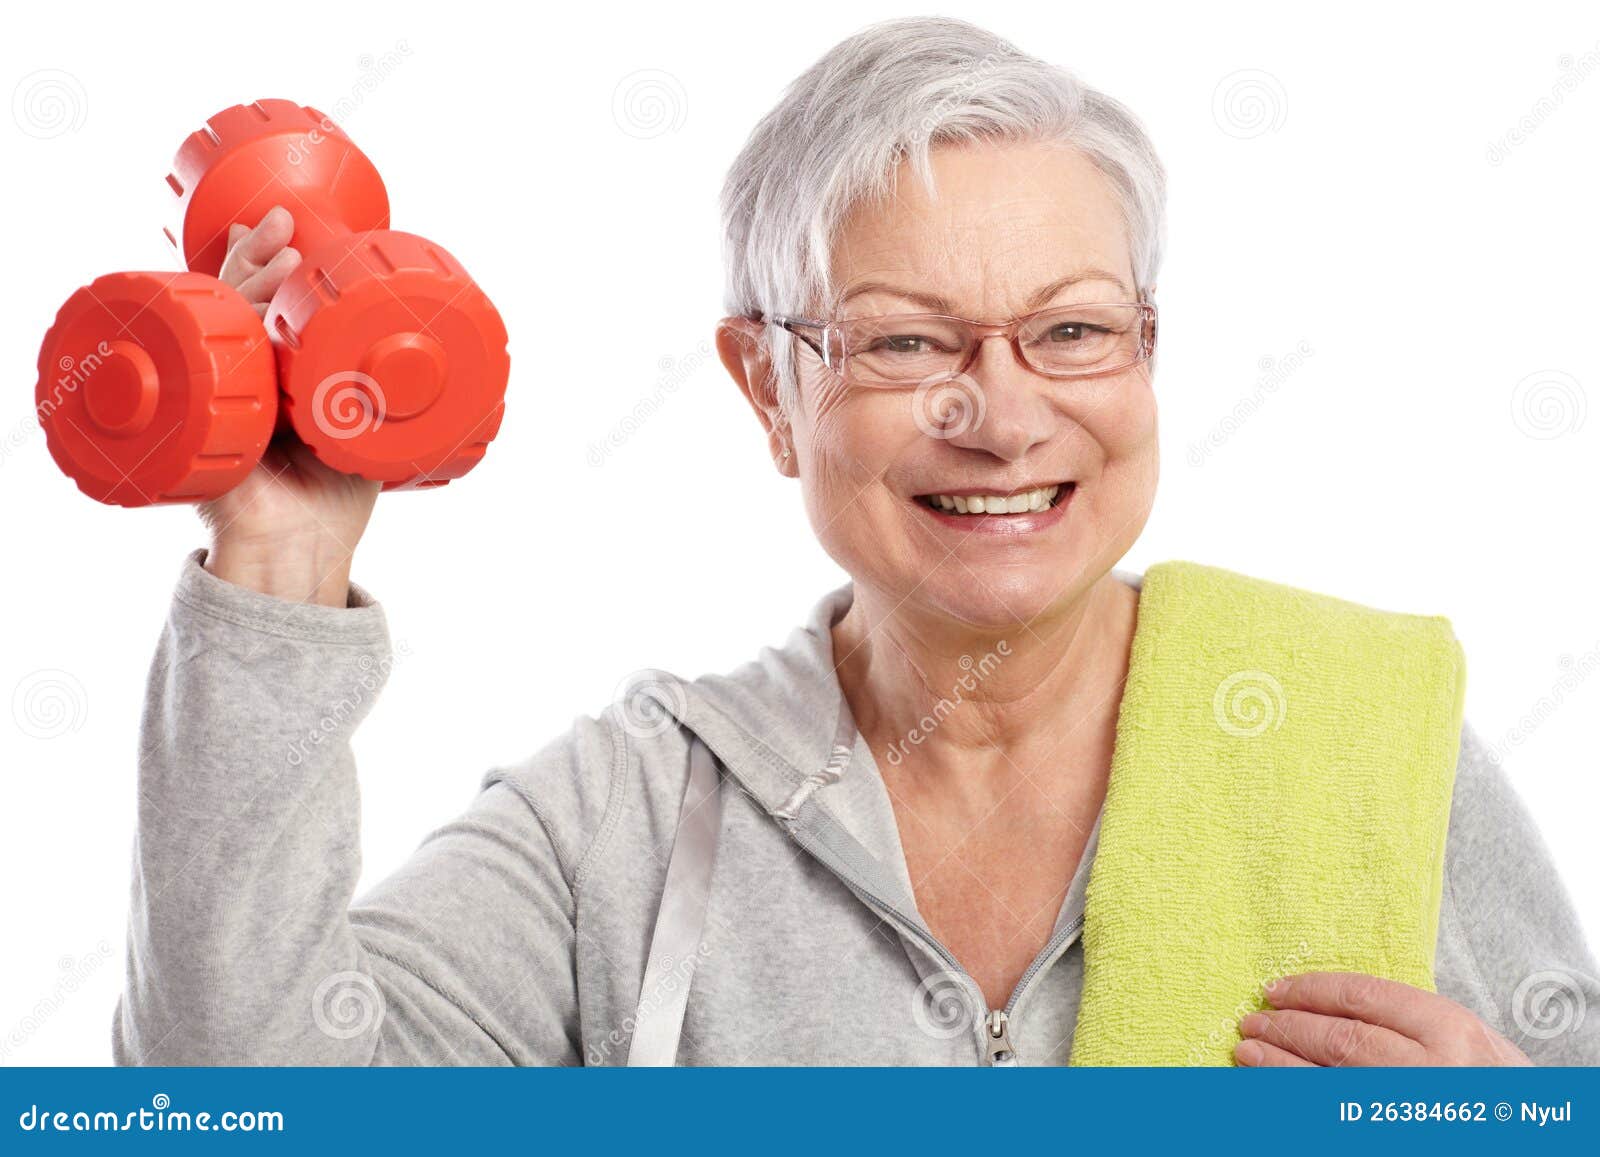 energetic elderly woman with dumbbells smiling